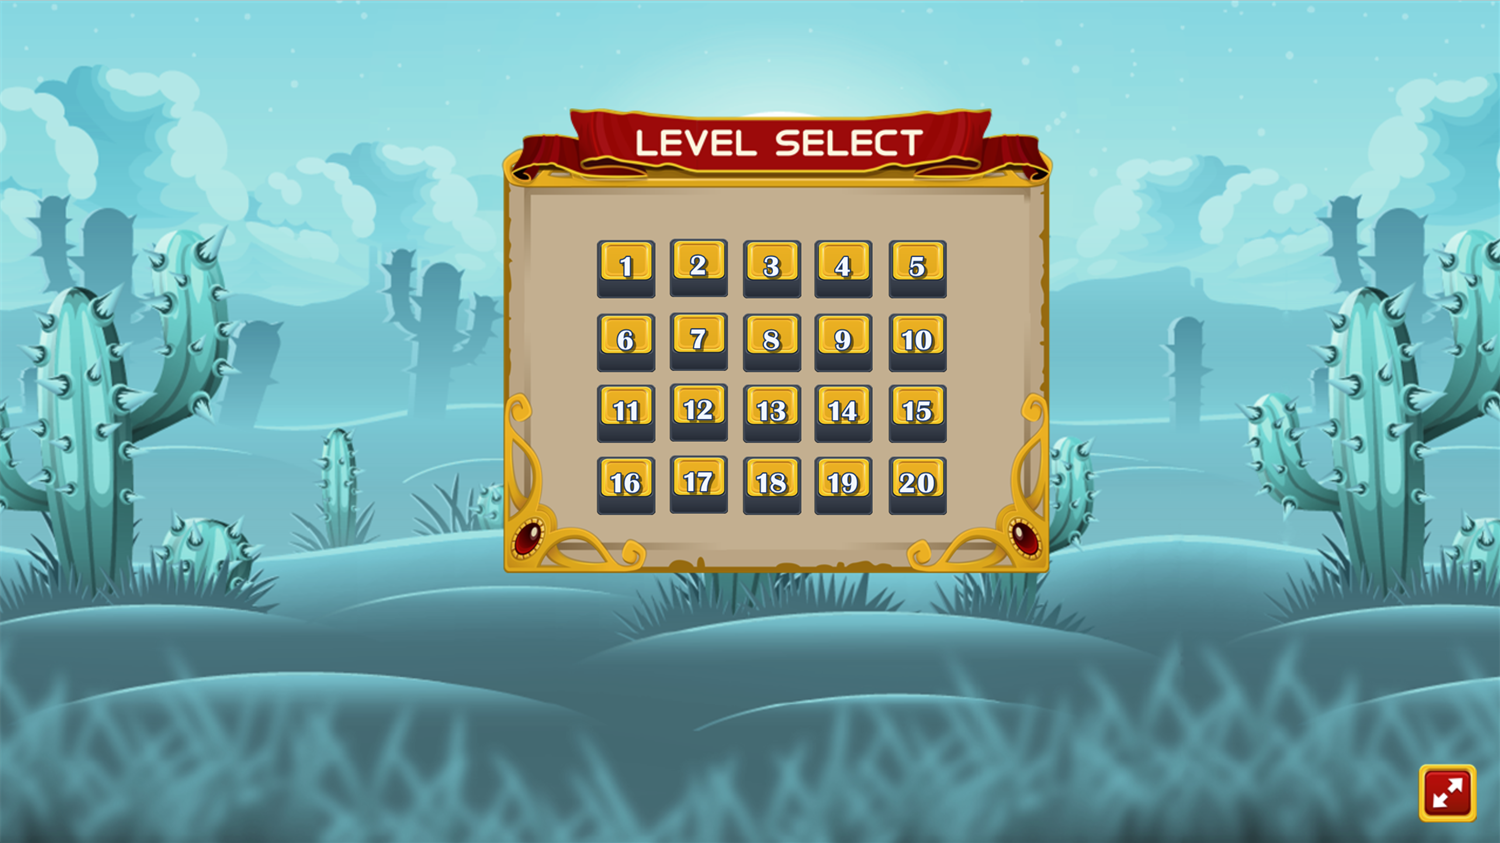 Stan the Man Game Level Select Screen Screenshot.